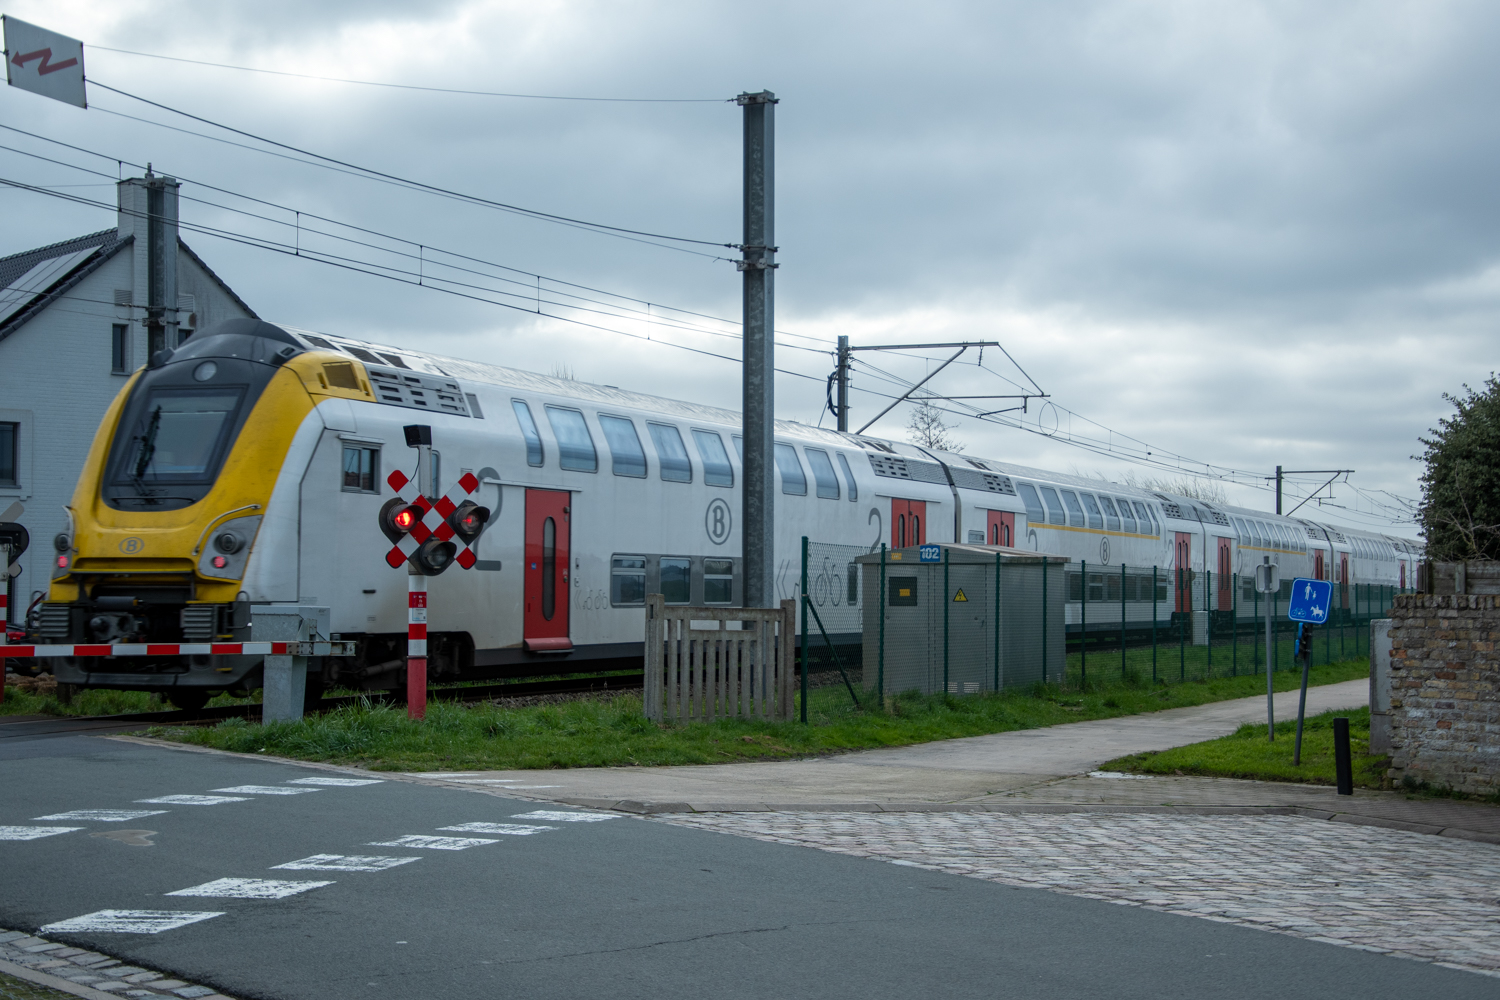 M7 te Avekapelle op weg om P trein 8000 te verzekeren.